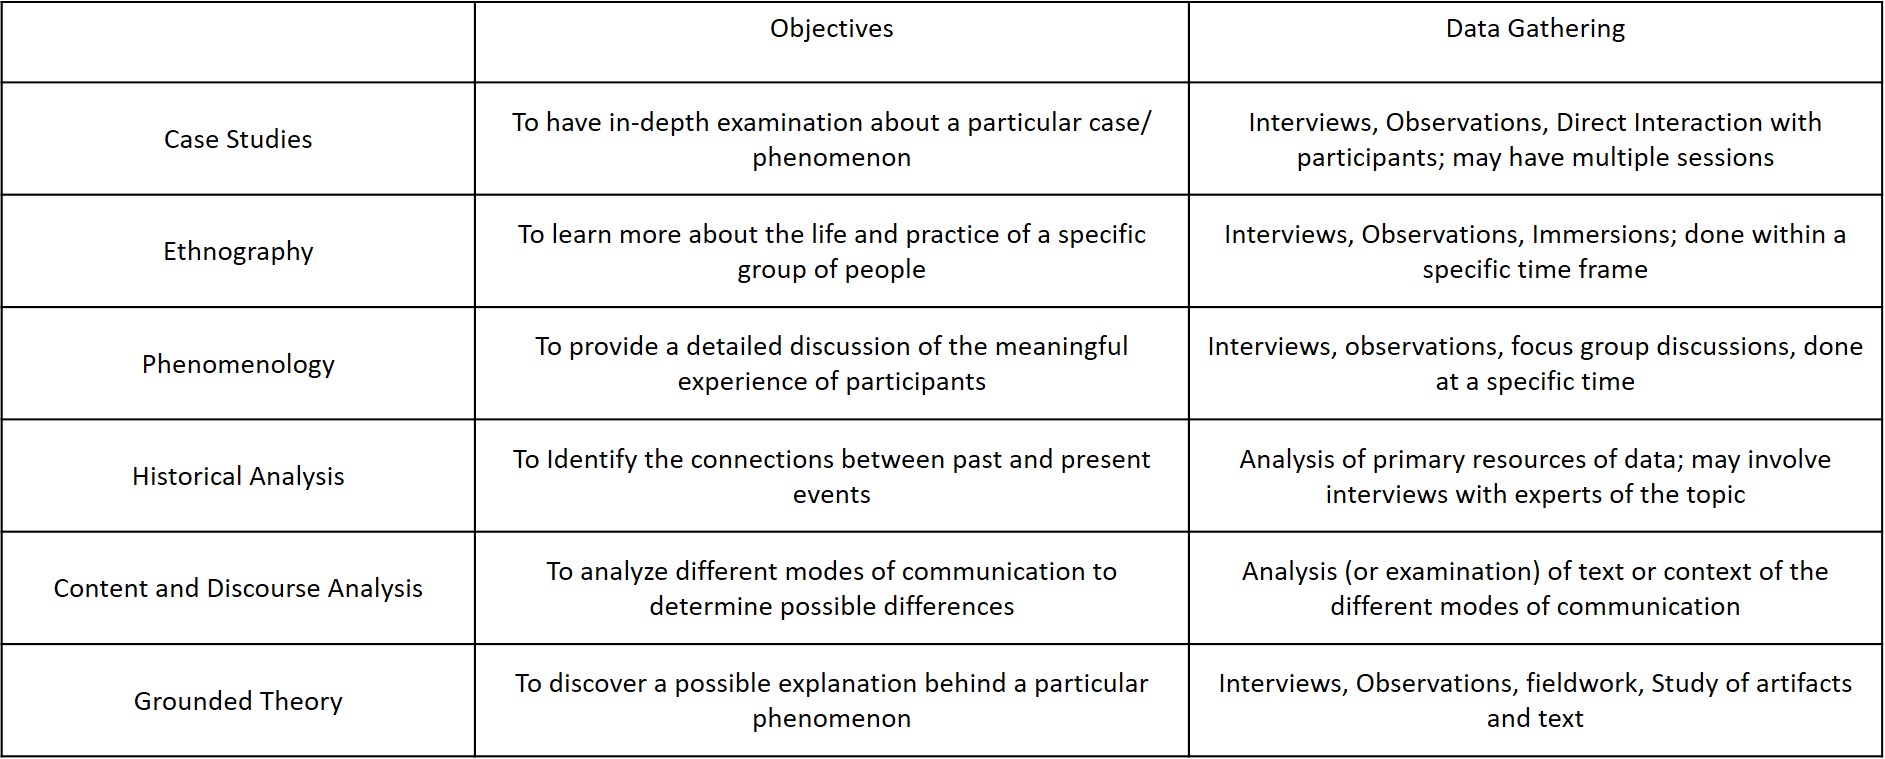 thick description qualitative research examples